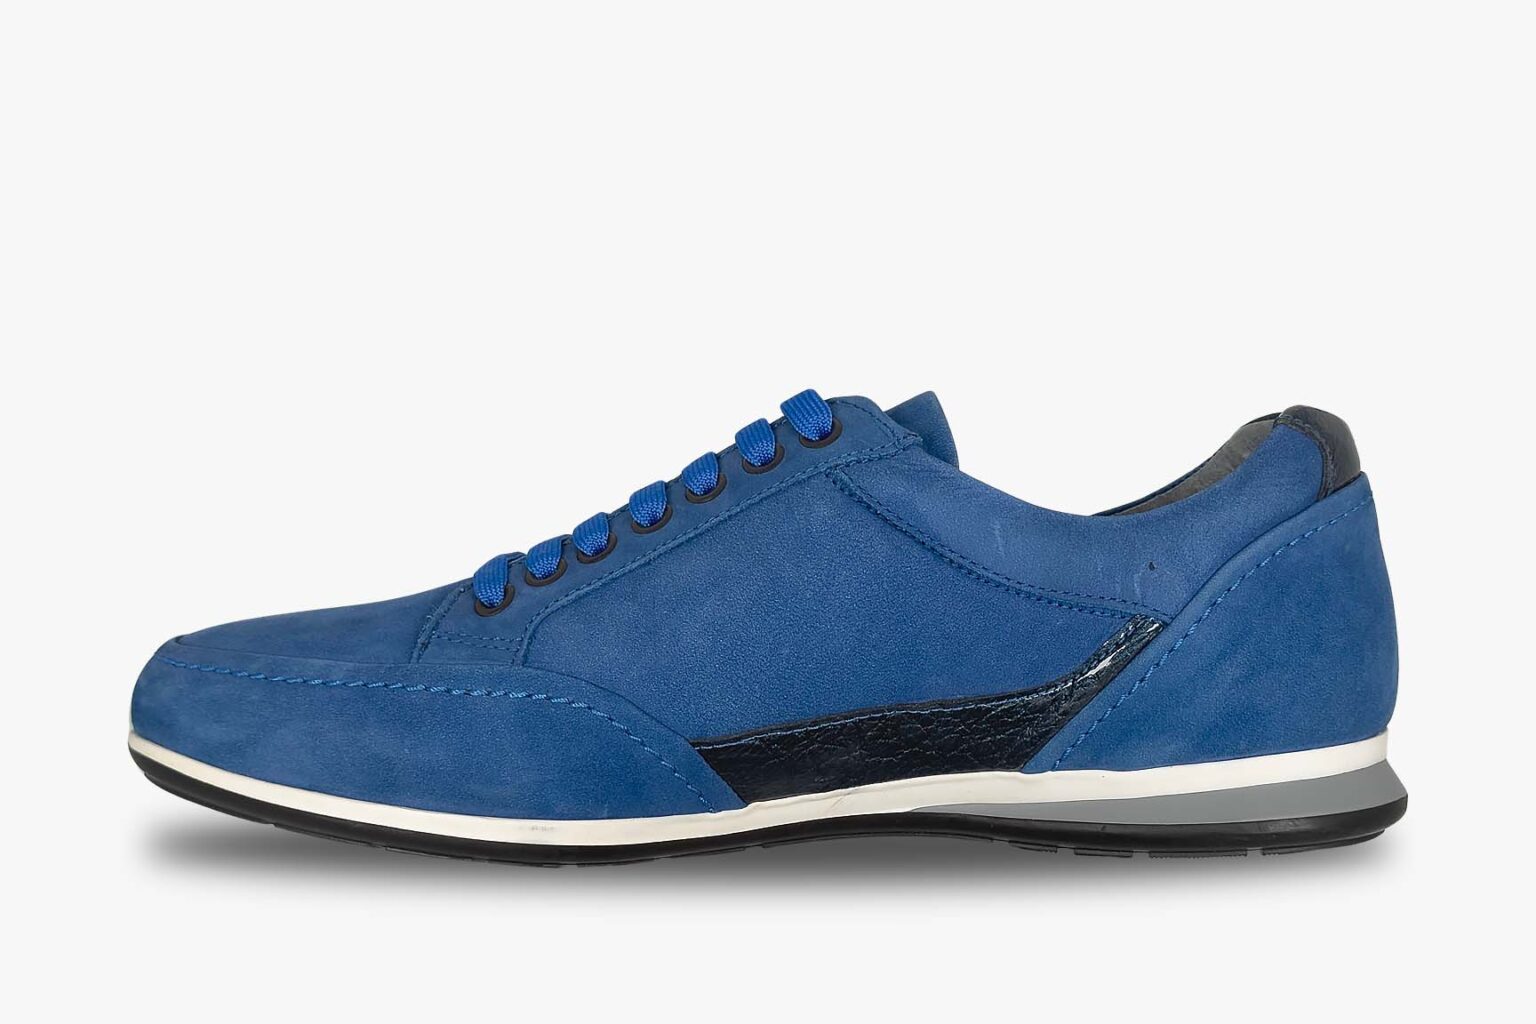 Christiano Ranaldo CR7 Sneakers Suede Blue left